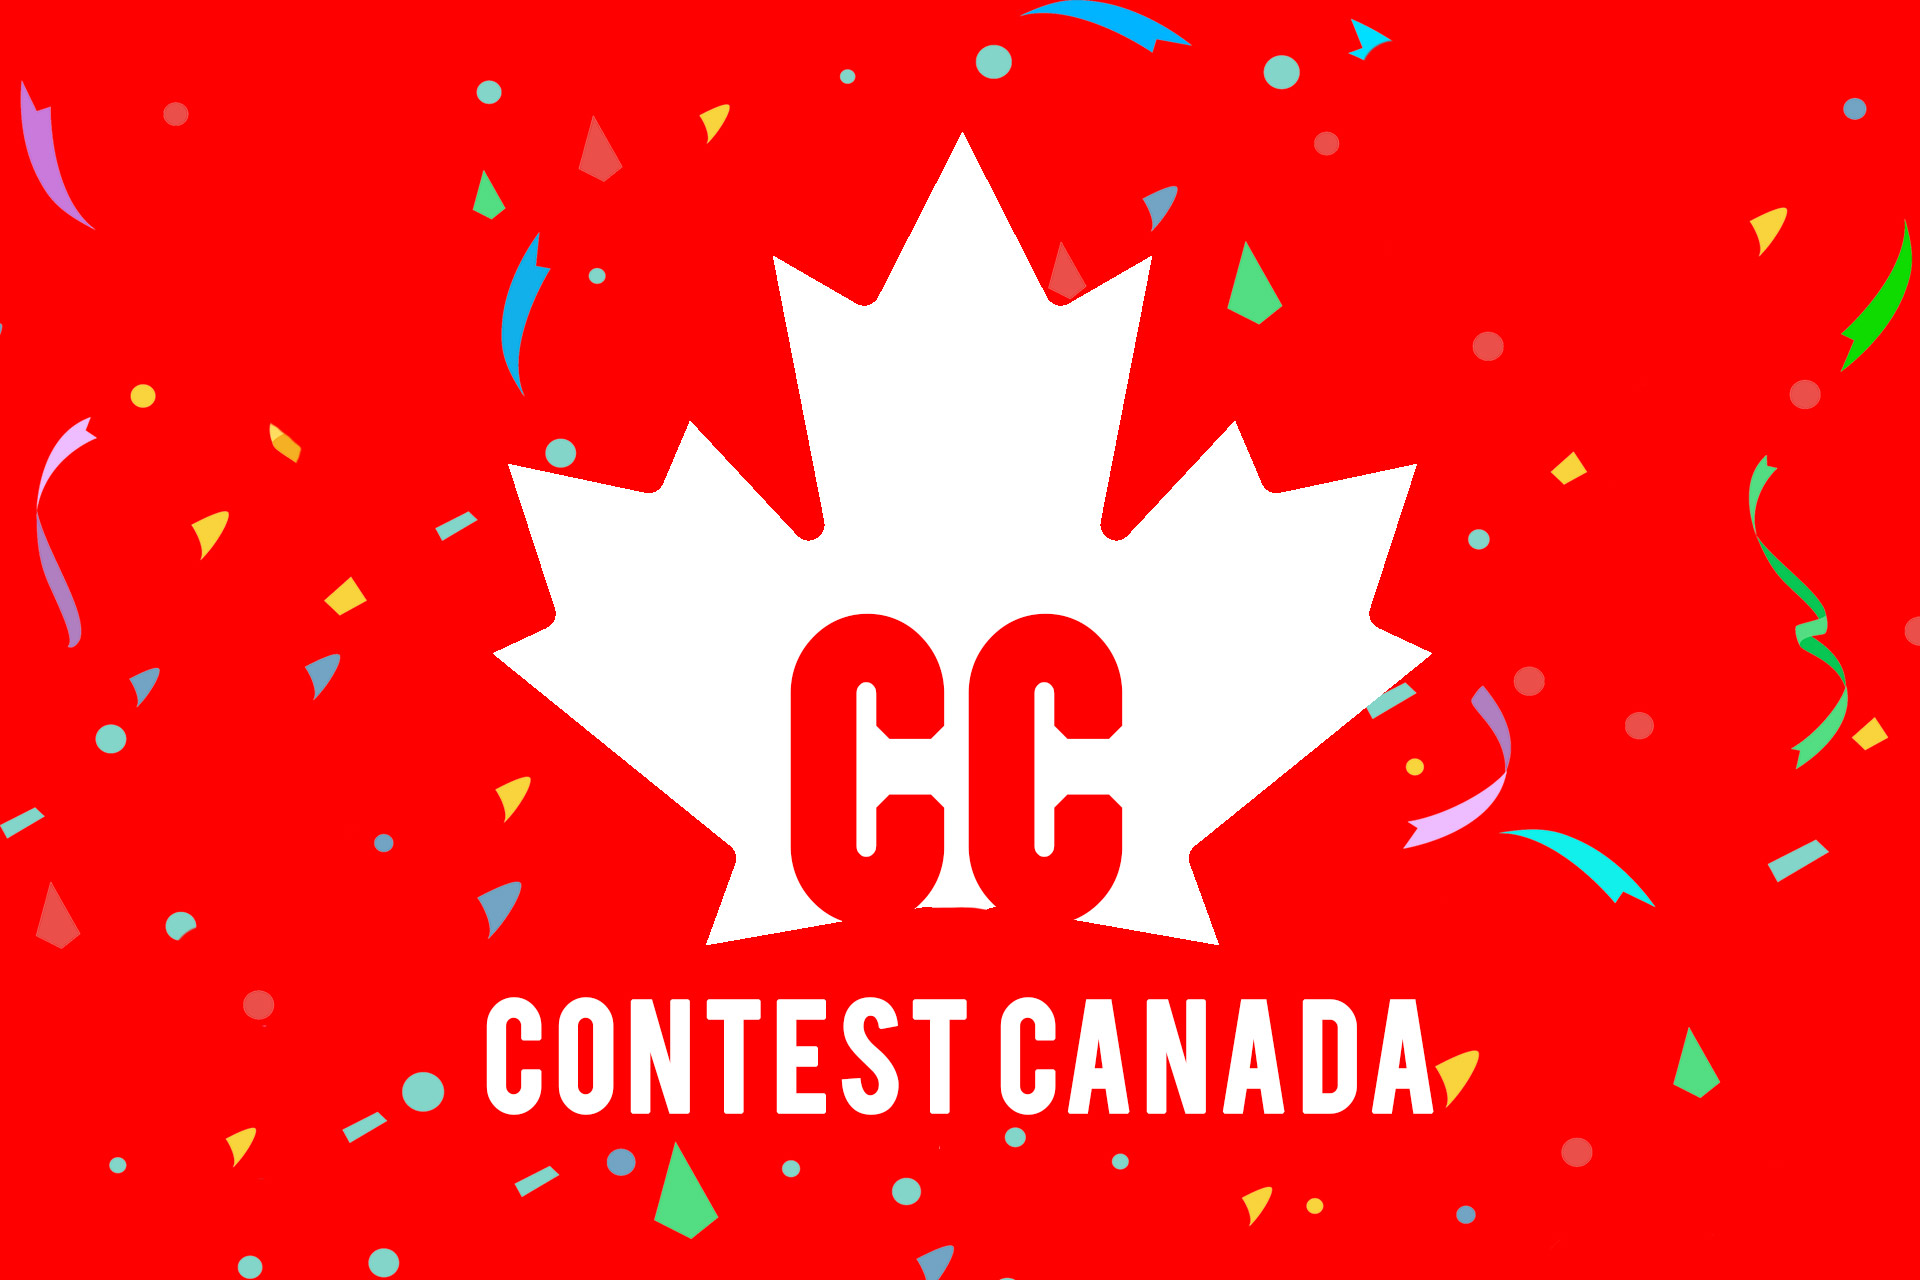 Contests in Canada Contest Canada